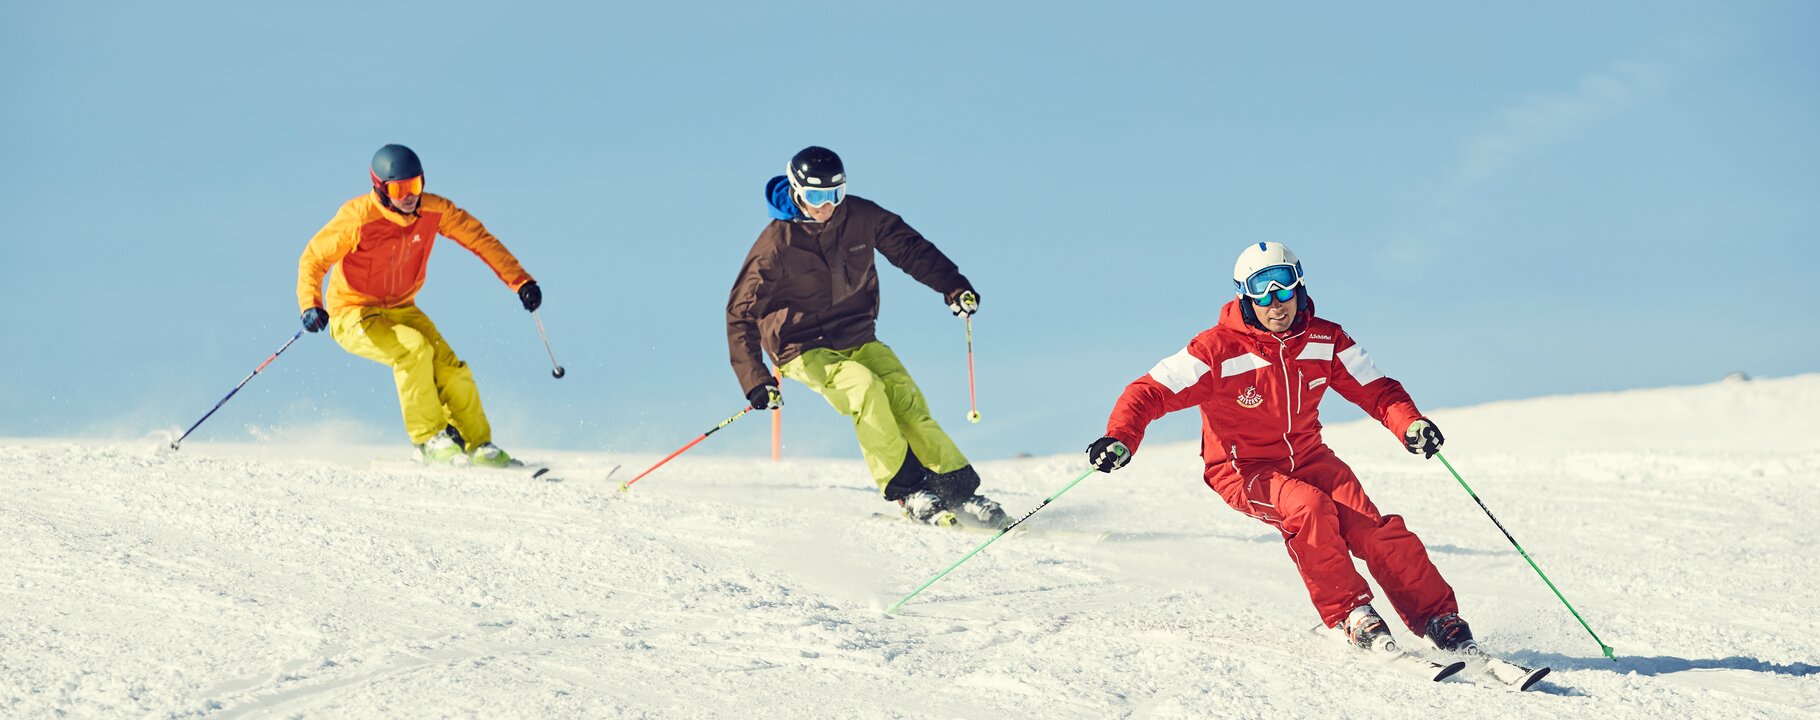 Ski lessons in ski school Fiss-Ladis | © Serfaus-Fiss-Ladis Marketing GmbH | Christian Waldegger